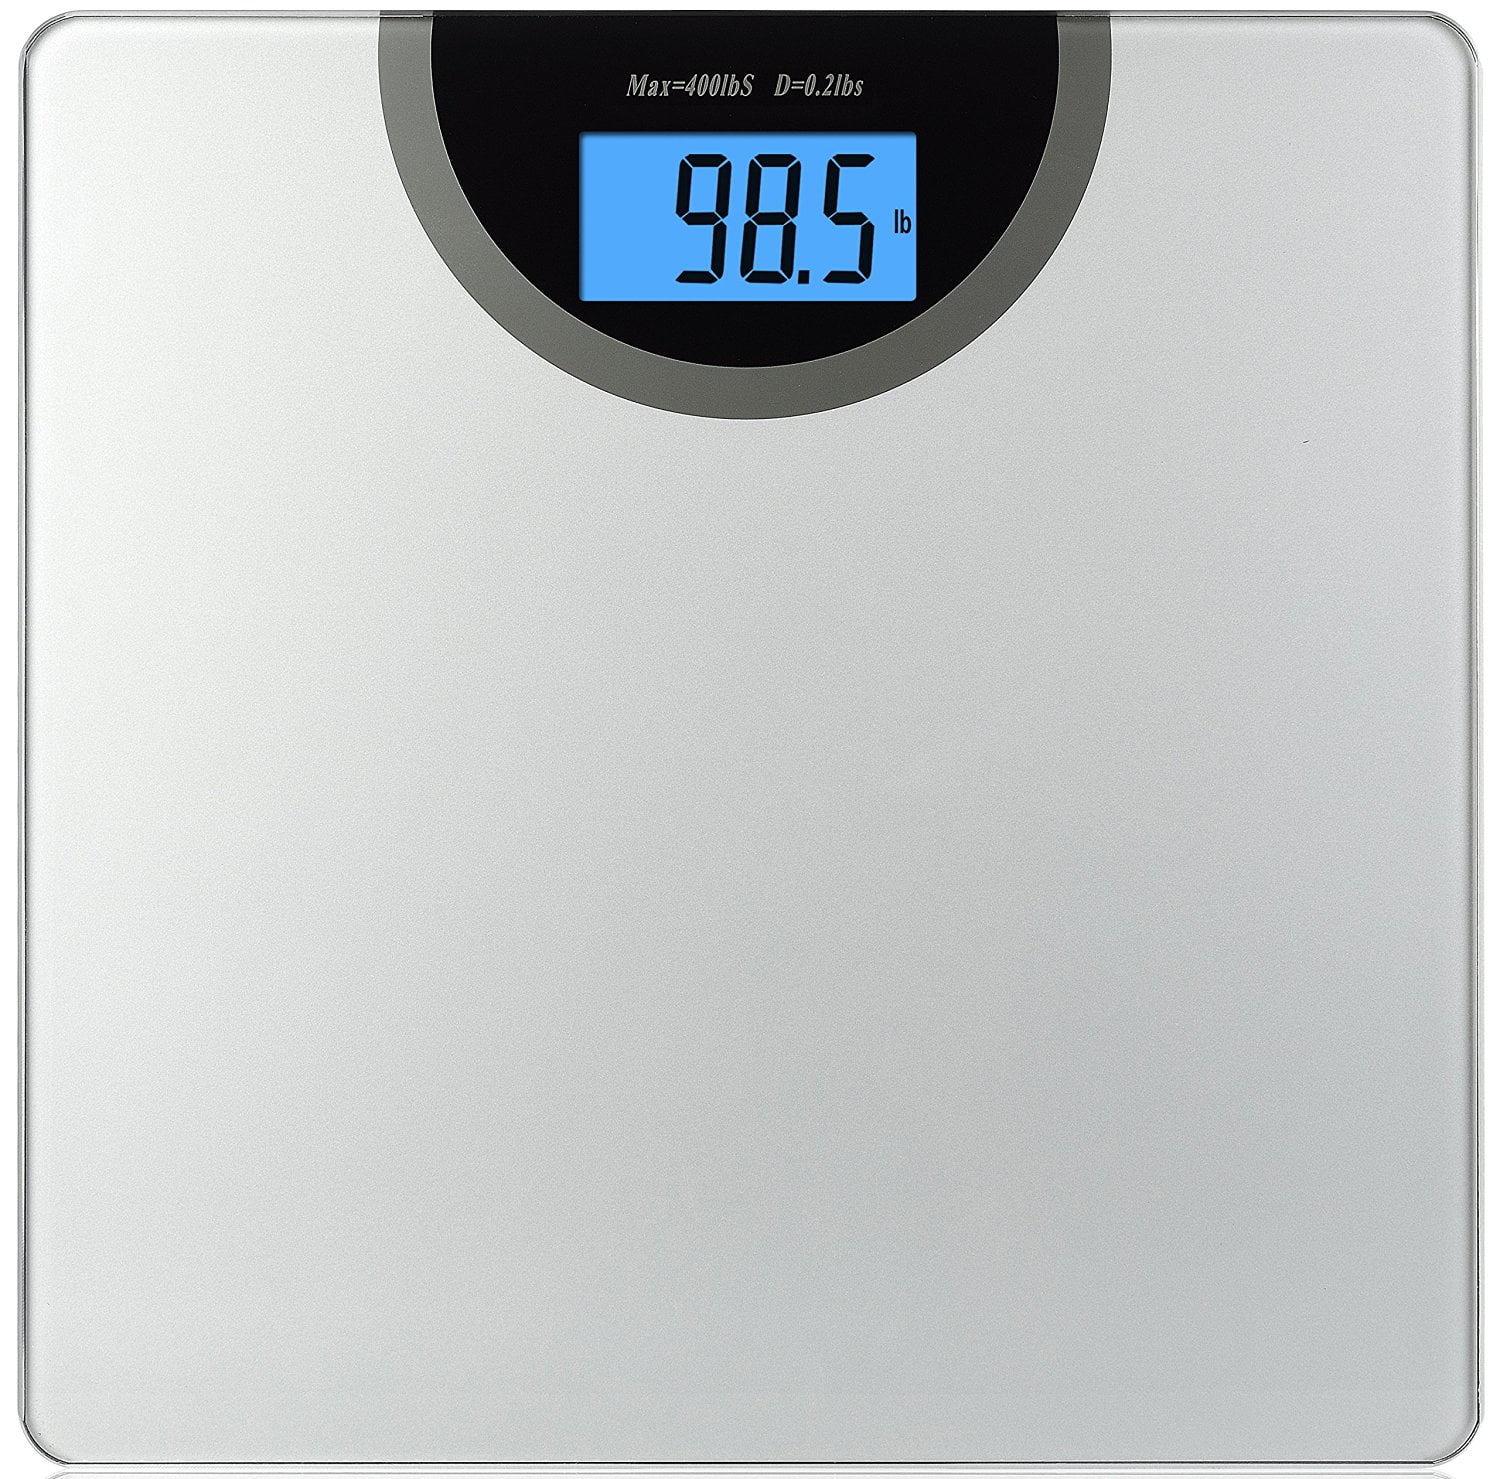 The My Weigh Elite Digital Bathroom Scale With Silver Platform